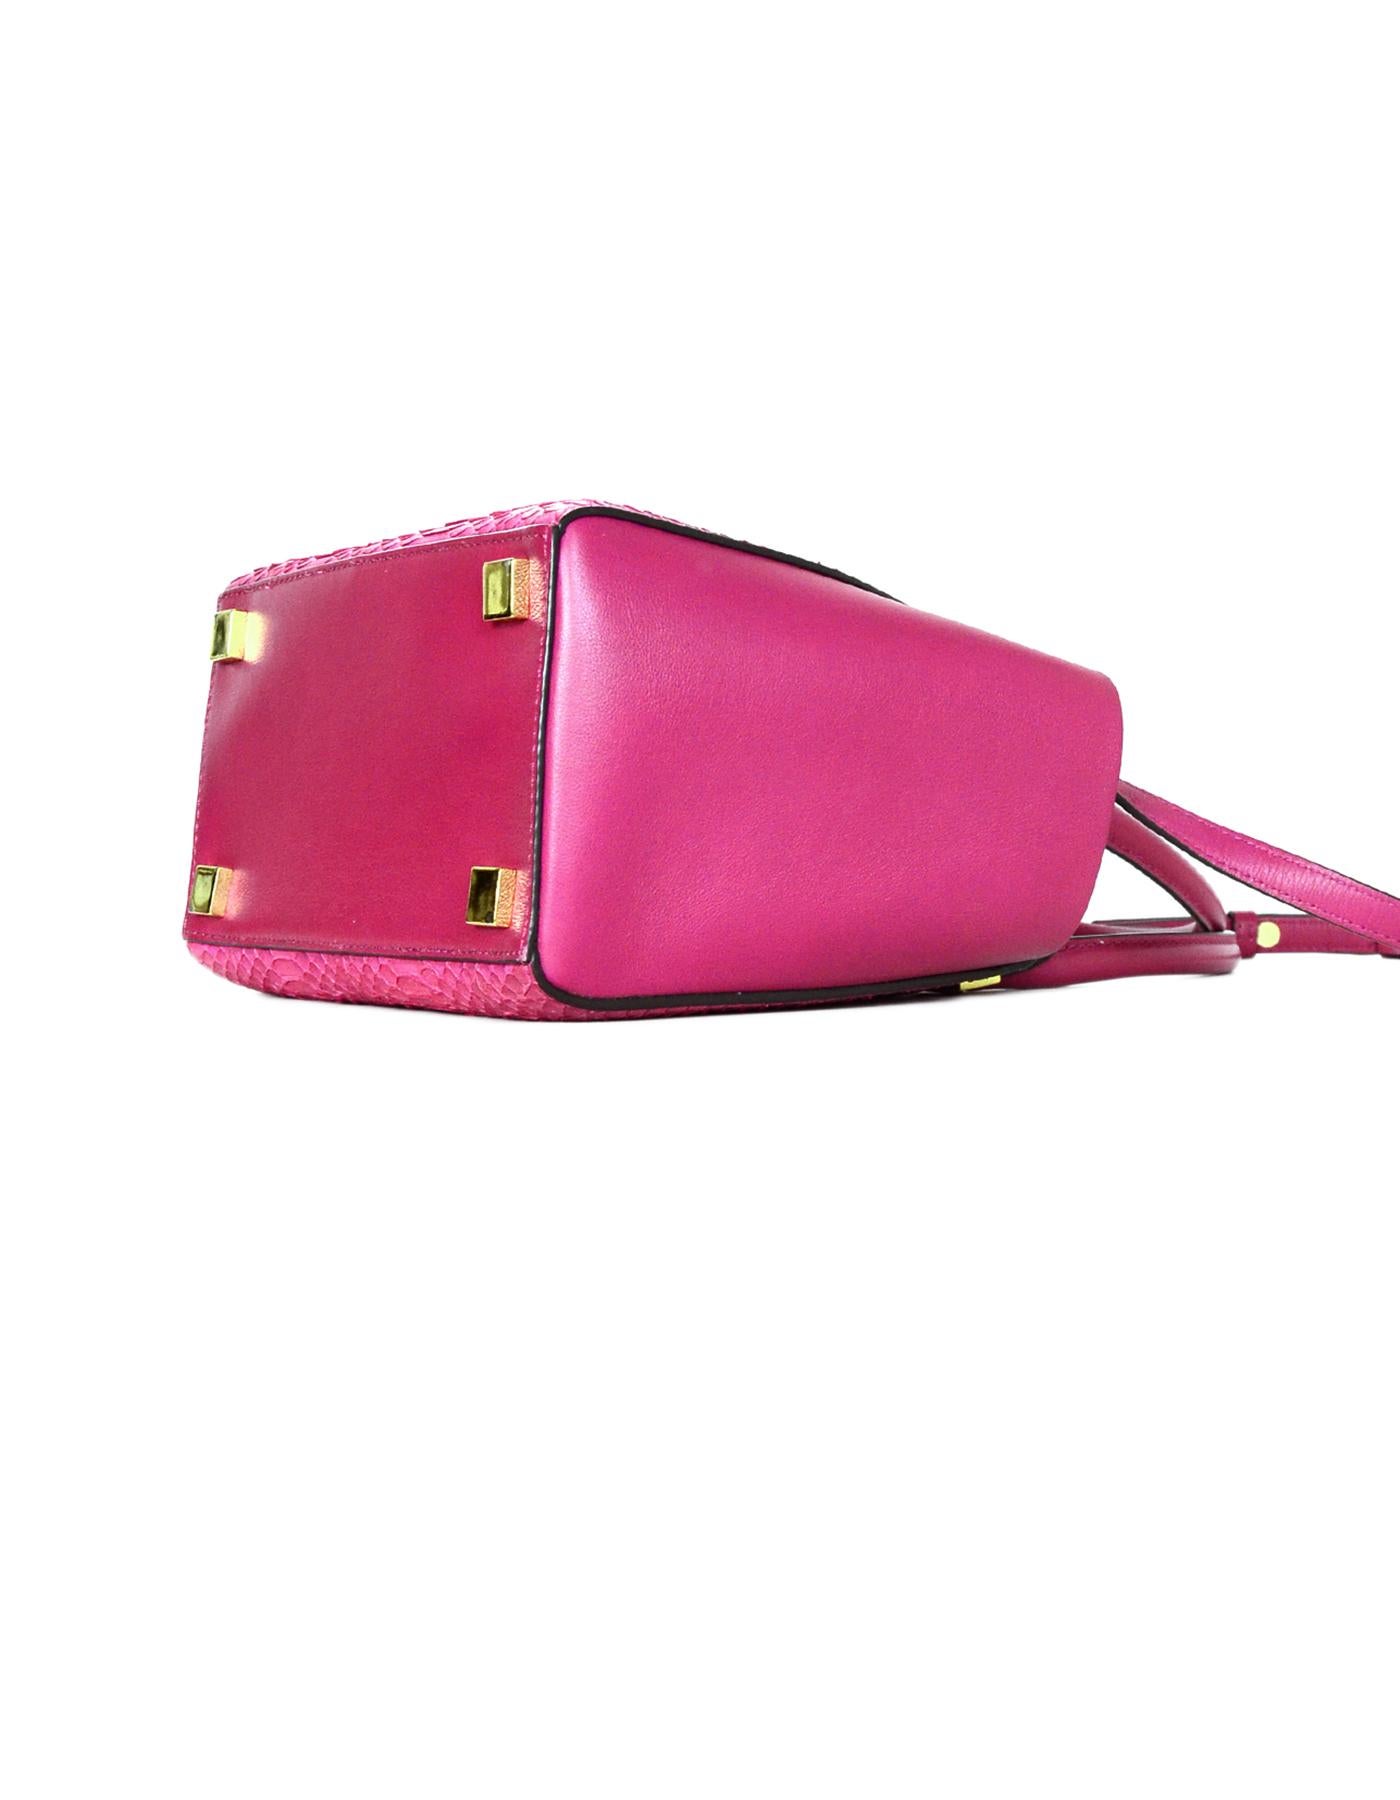 Michael Kors Pink Leather/Python Extra Small Miranda Crossbody Bag 2